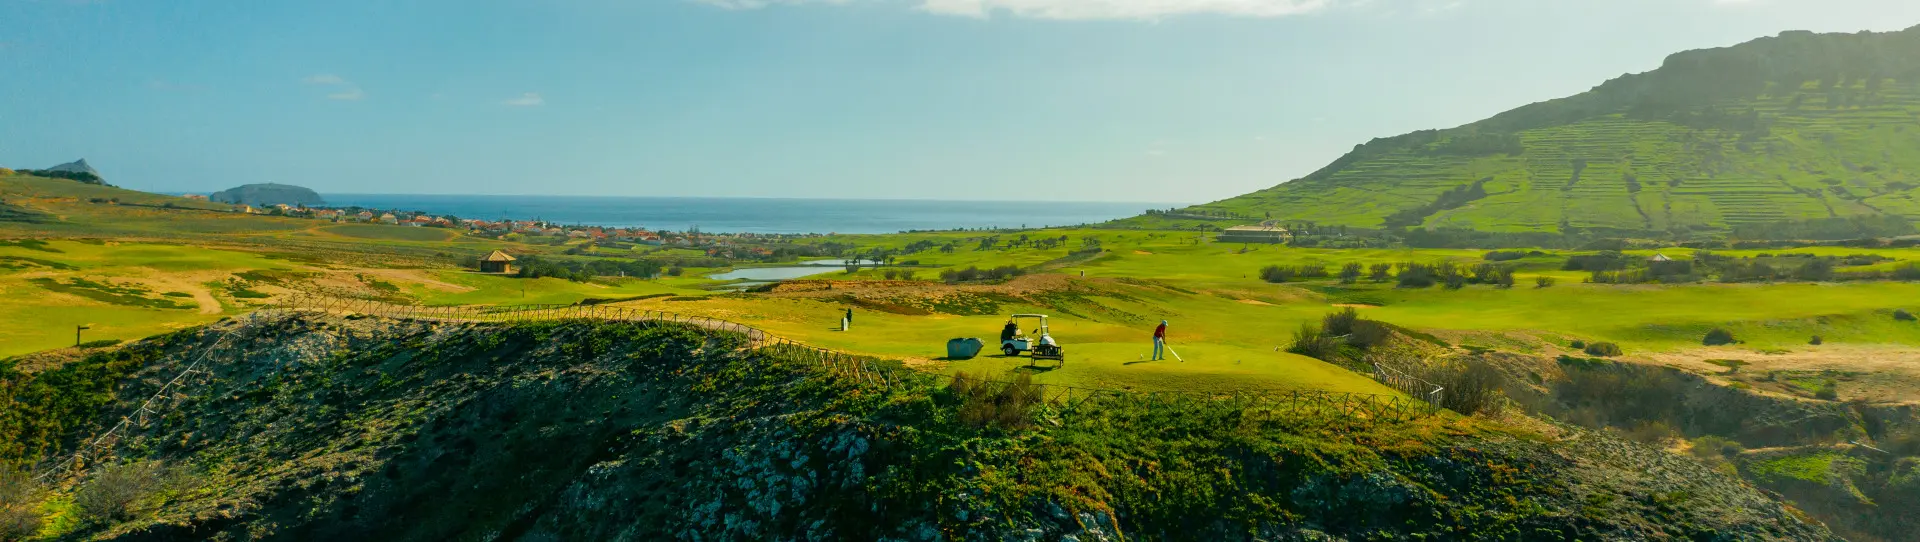 Portugal golf holidays - Madeira Golf Premium Passport 6 Rounds - Photo 2